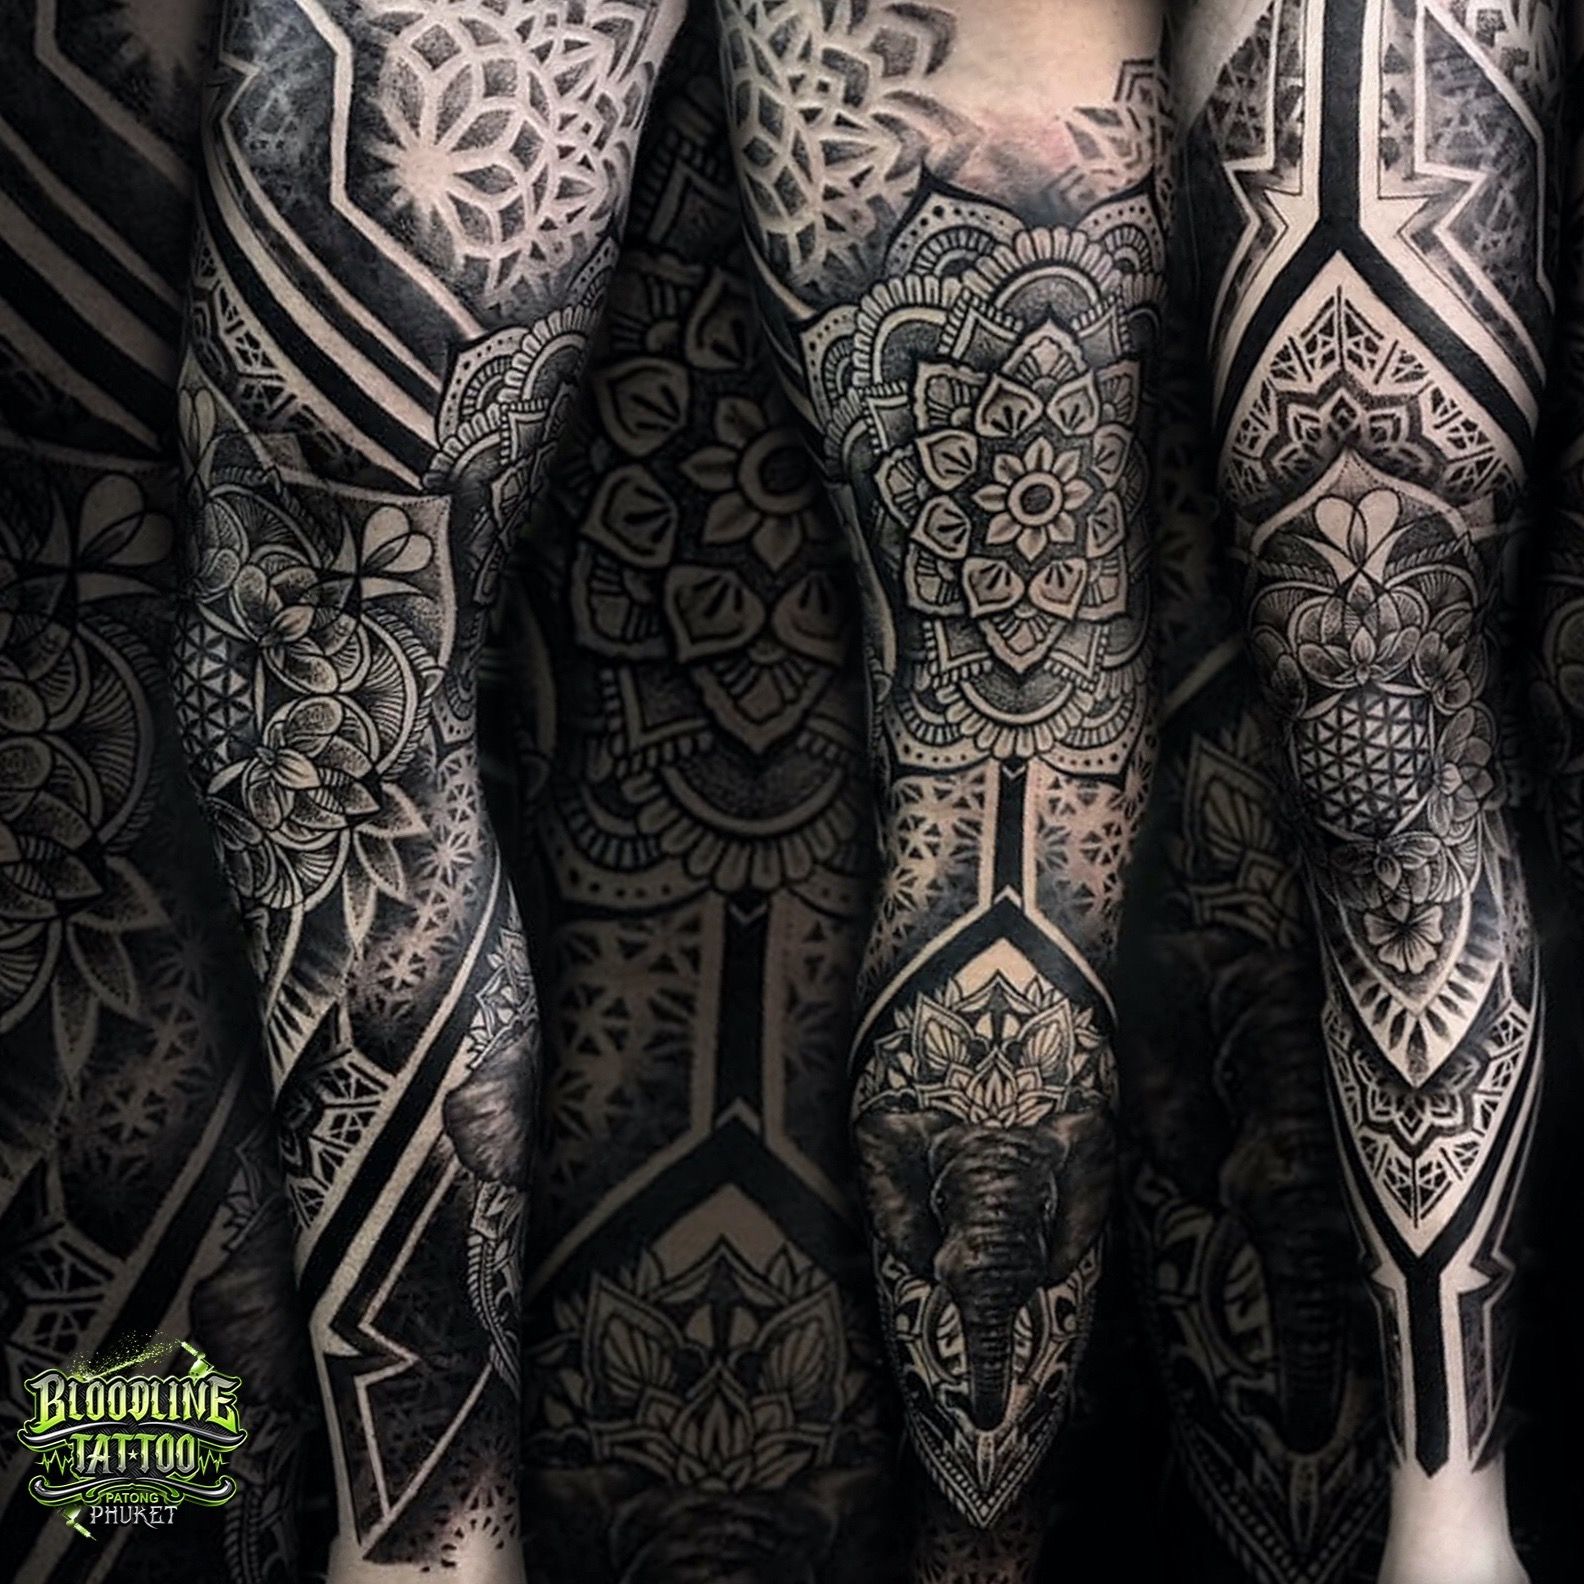 Tattoo uploaded by Bloodline Tattoo Phuket • Geometric/Mandala Full Leg Sleeve • Tattoodo